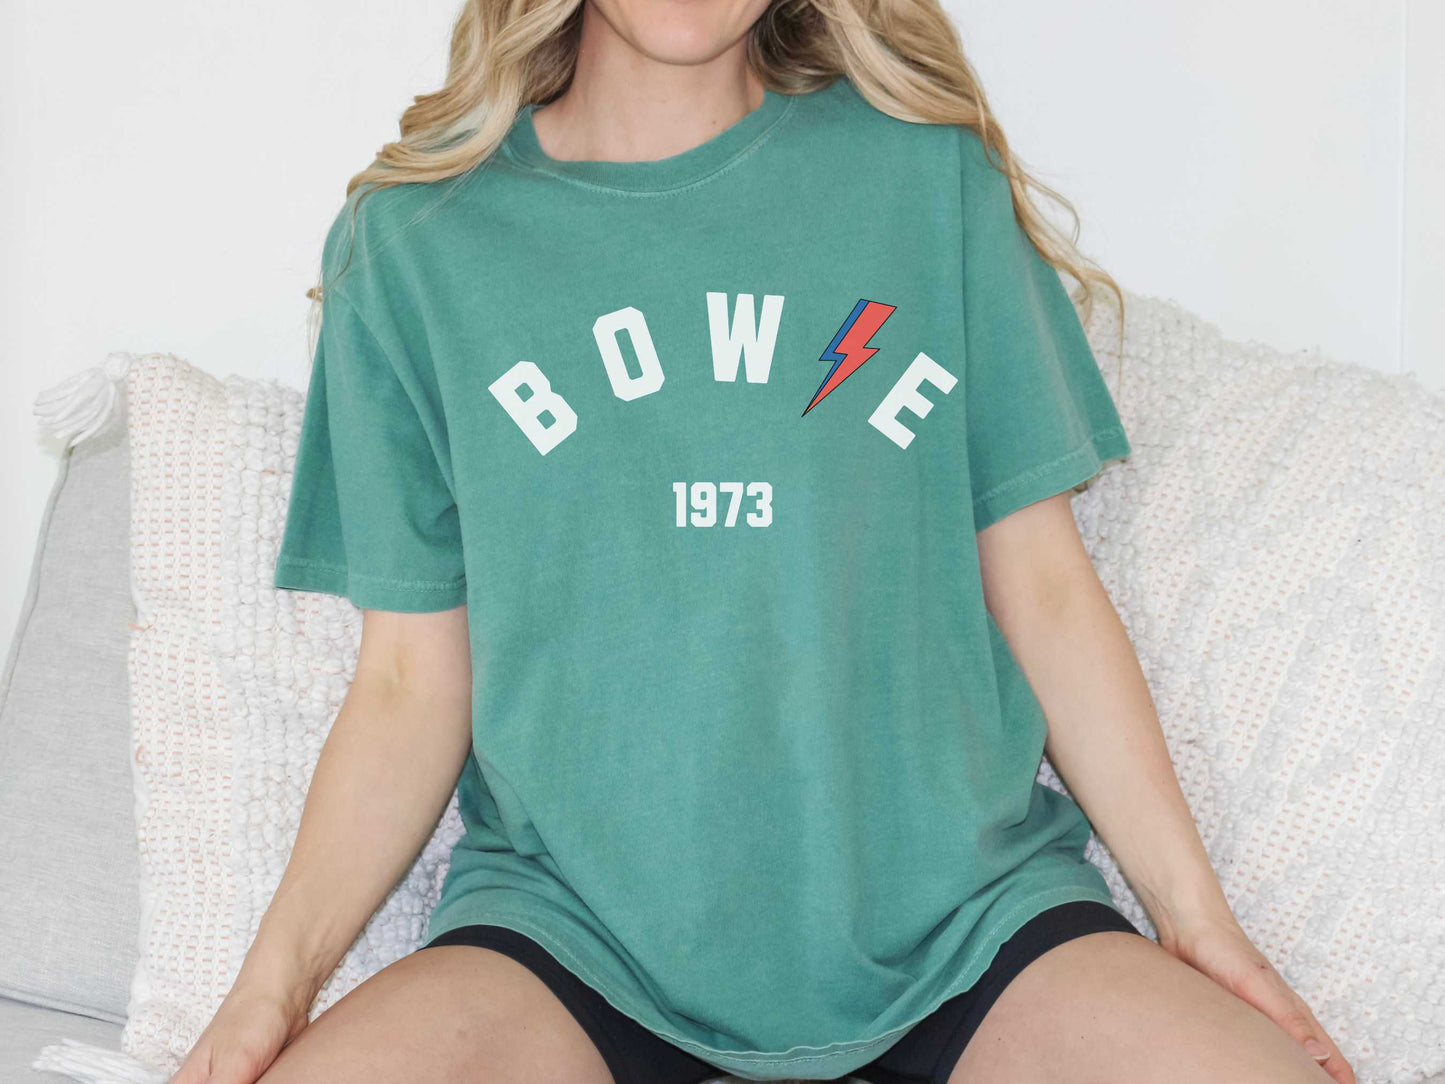 David Bowie "Bowie 1973" T-Shirt in Light Green